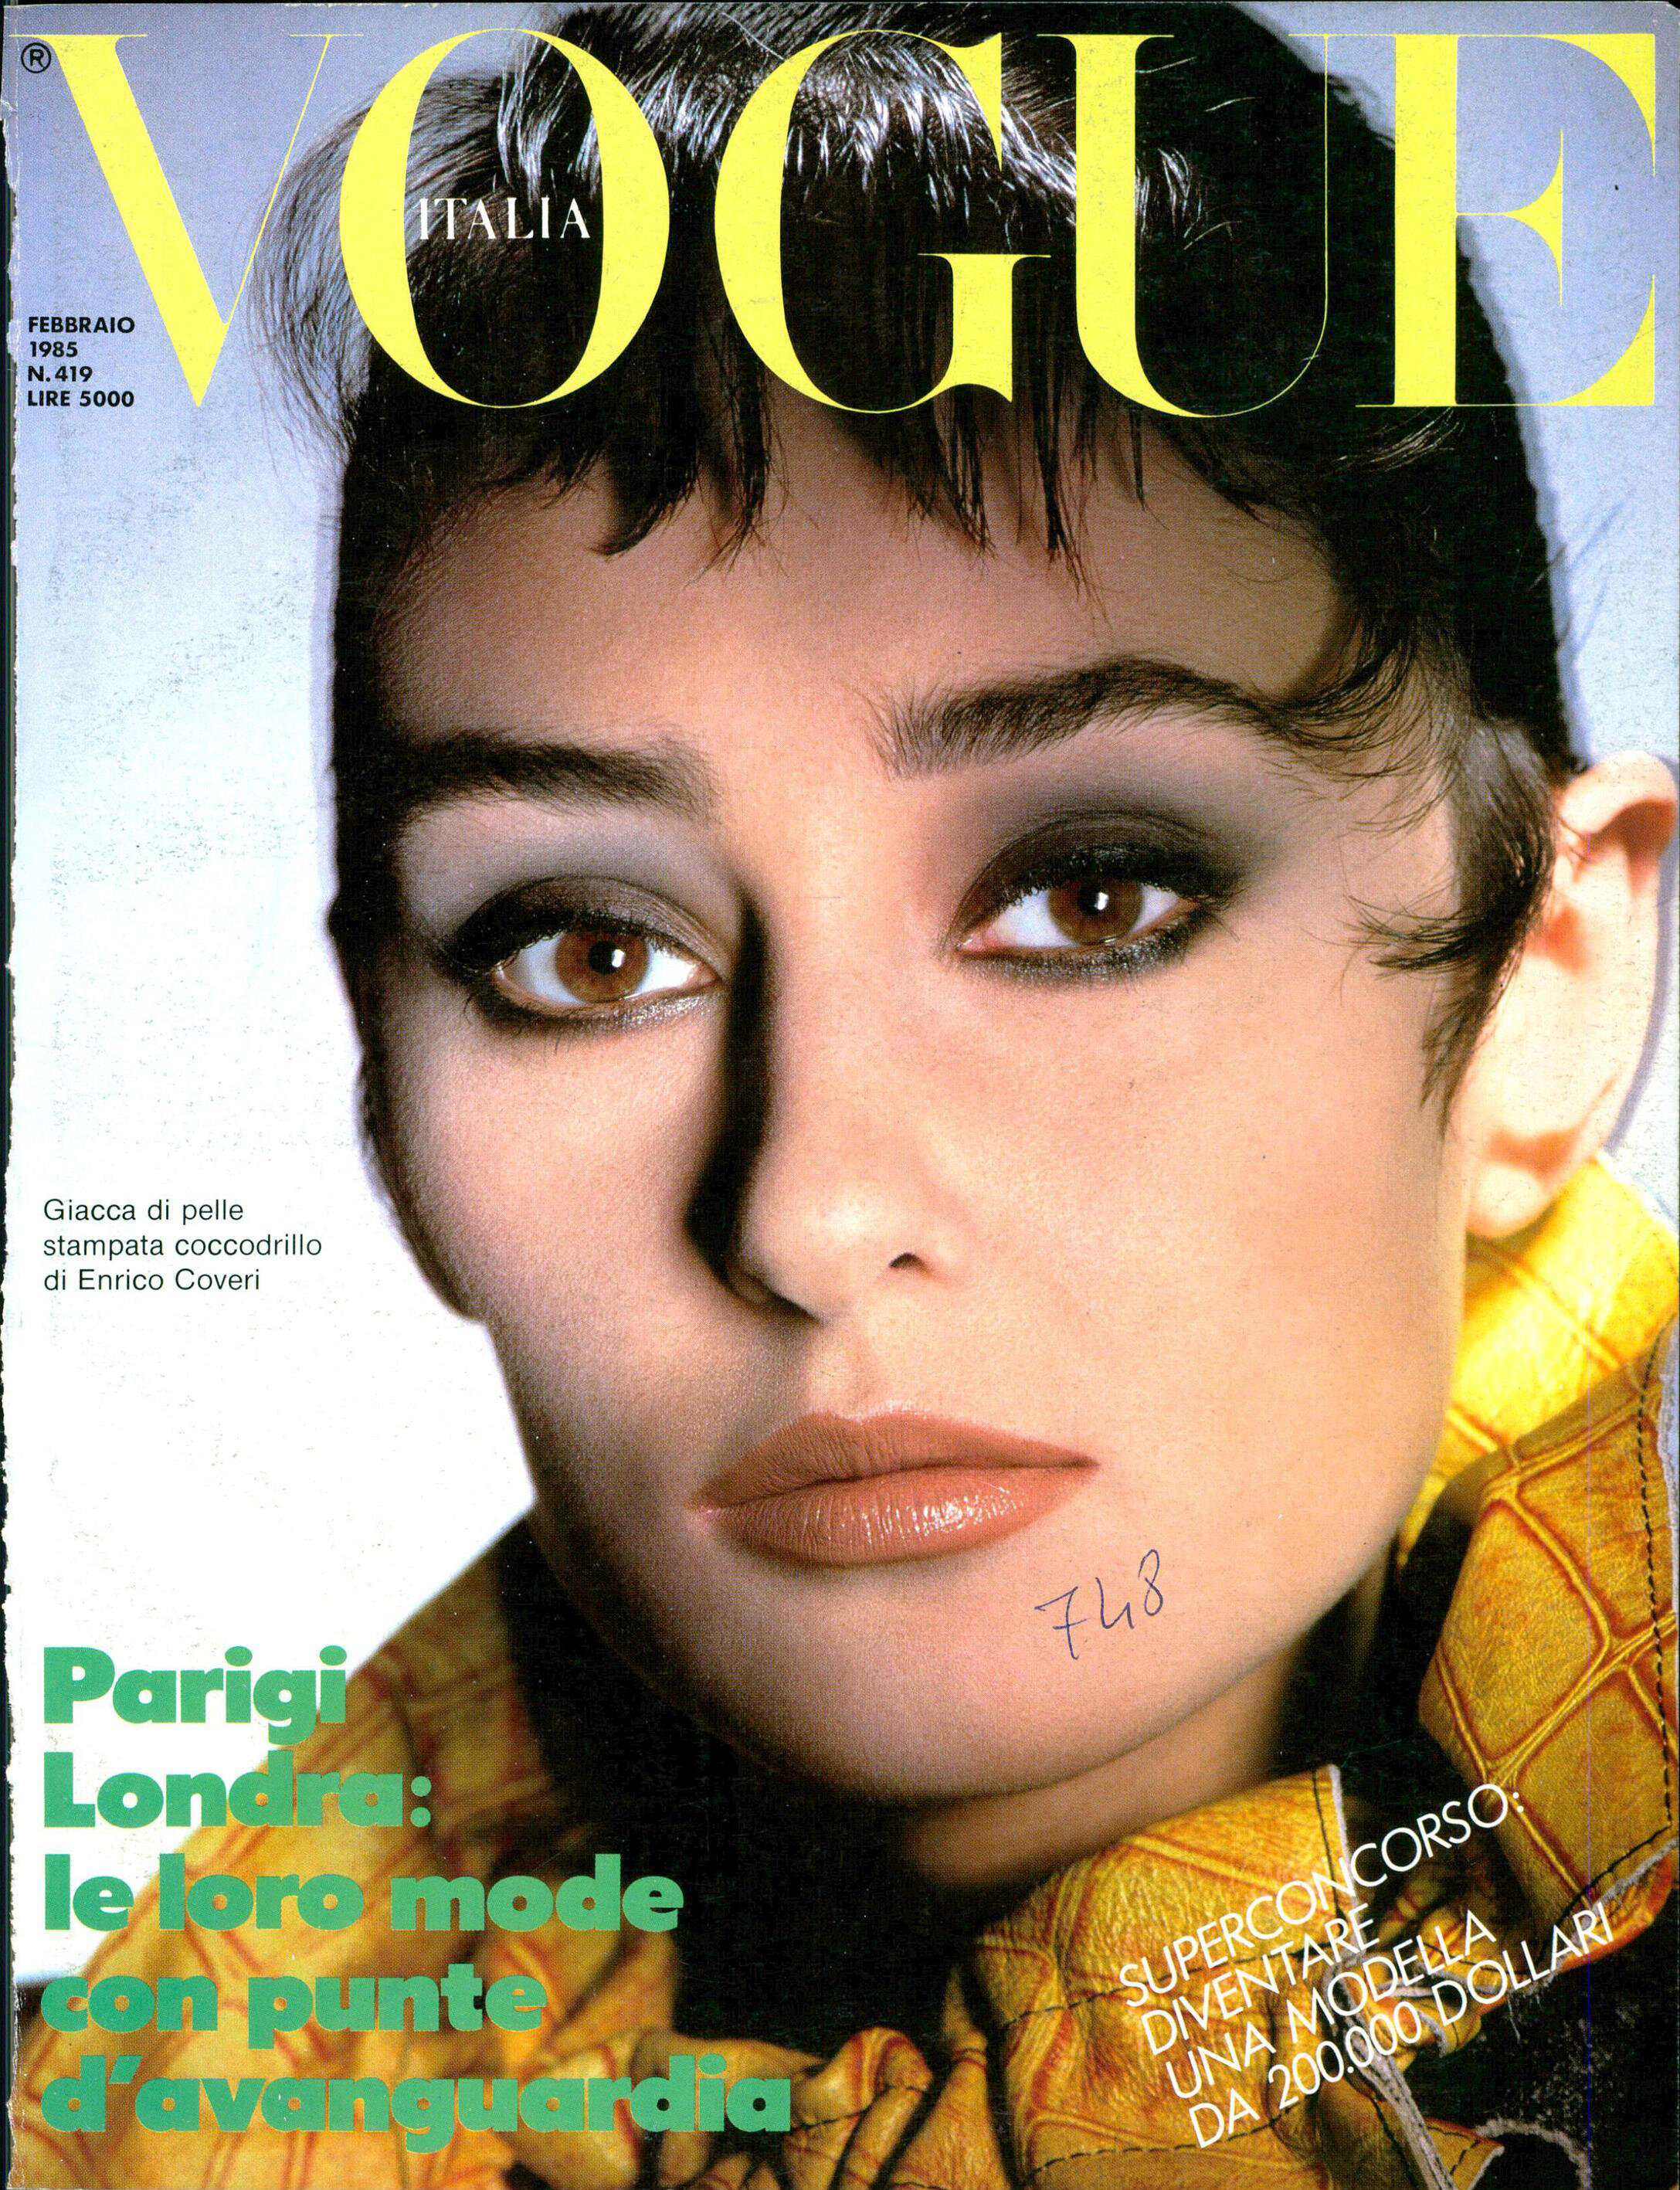 Vogue Italia (Feb 1985)_hiro_gillette_1.jpg